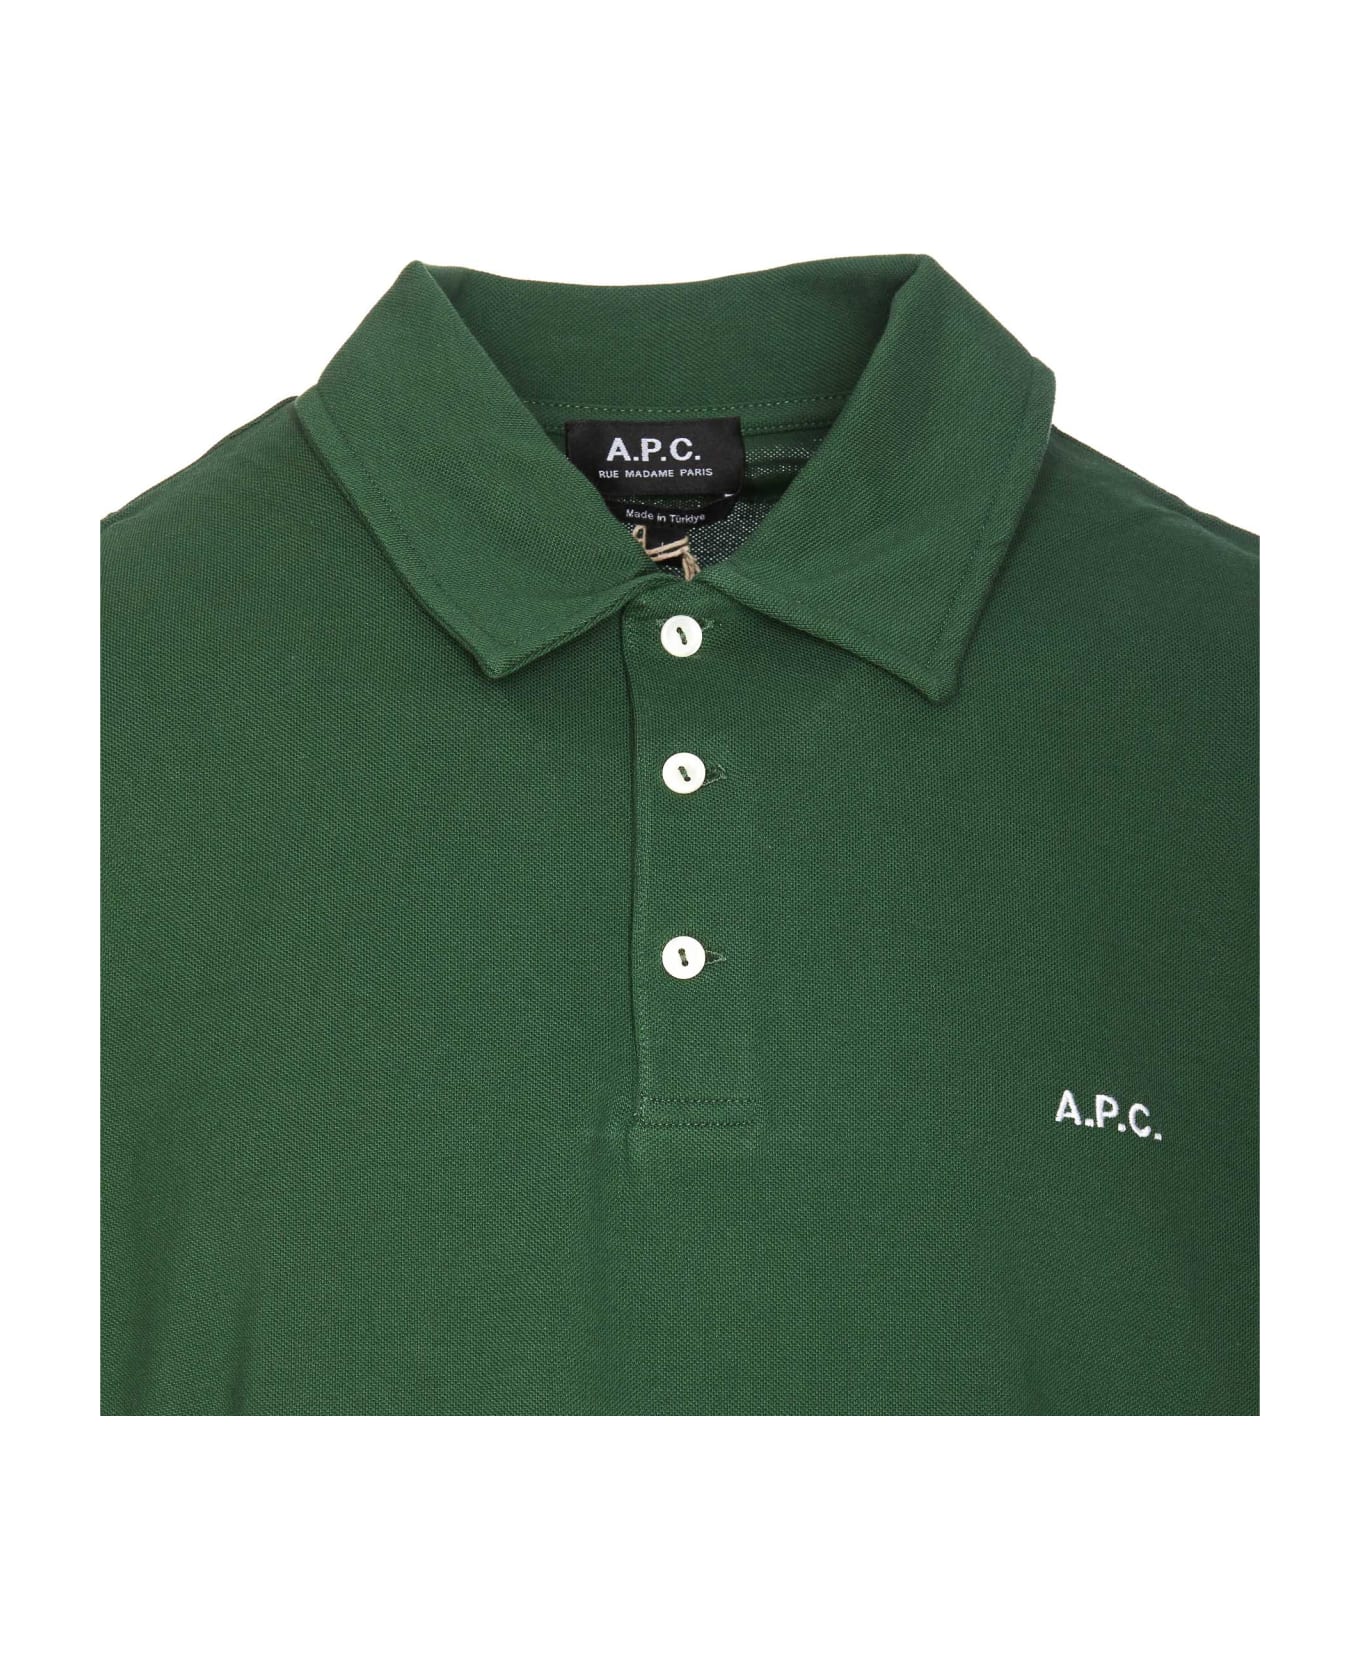 A.P.C. Austin Polo - Green name:472